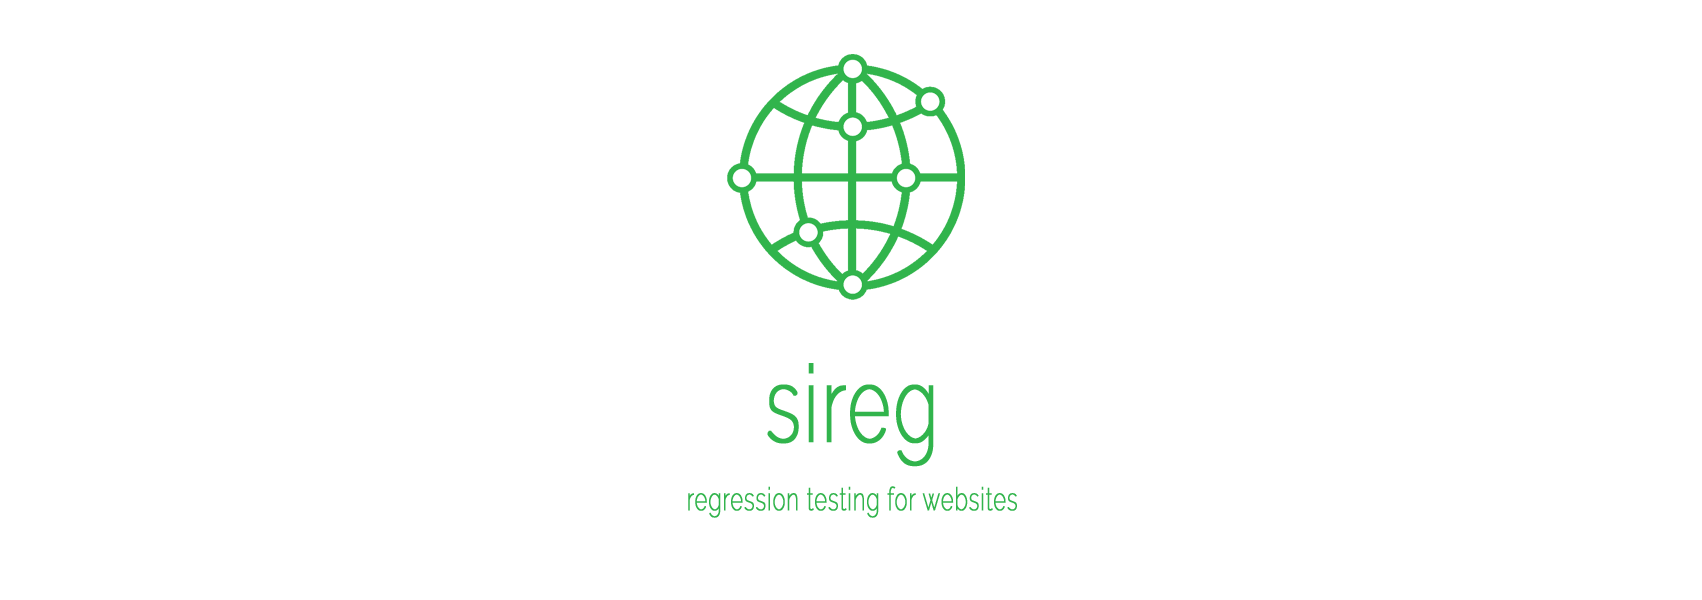 sireg - regression testing for websites